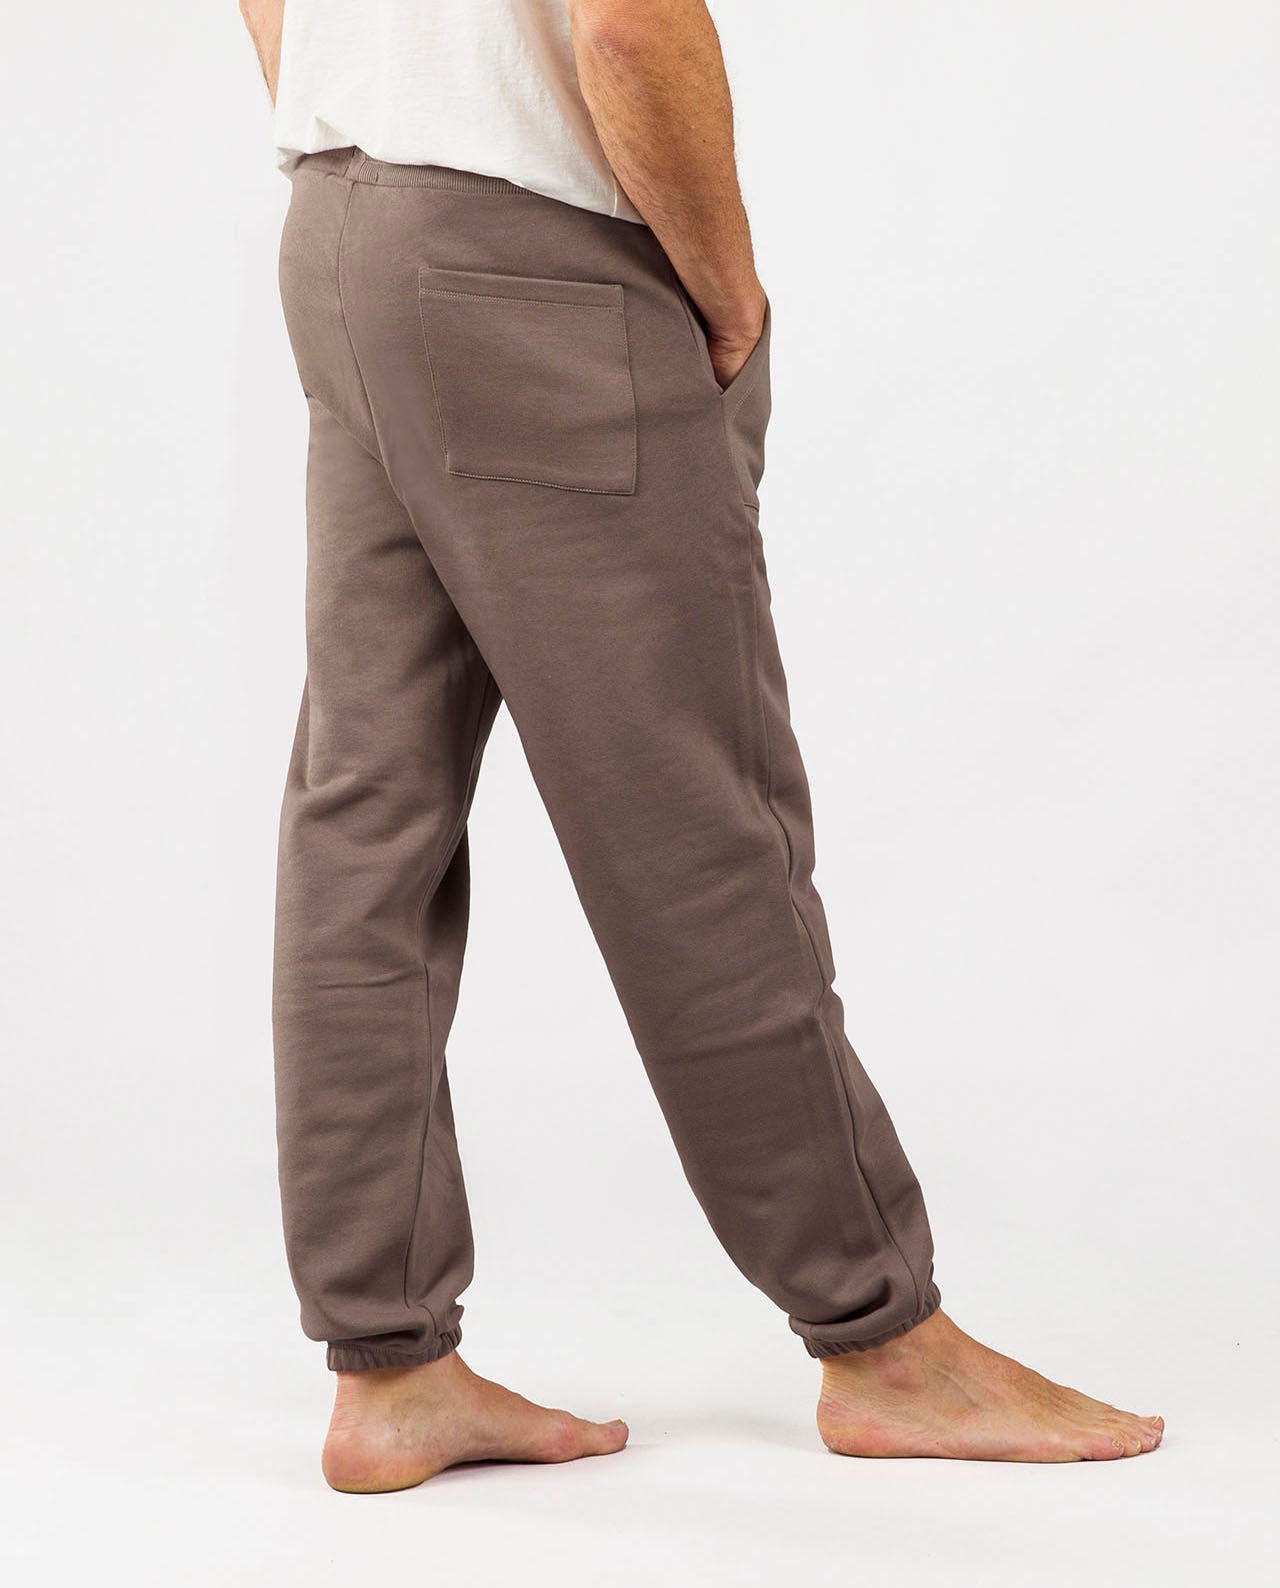 Pantalon de jogging homme poches cargo Mario Blossom